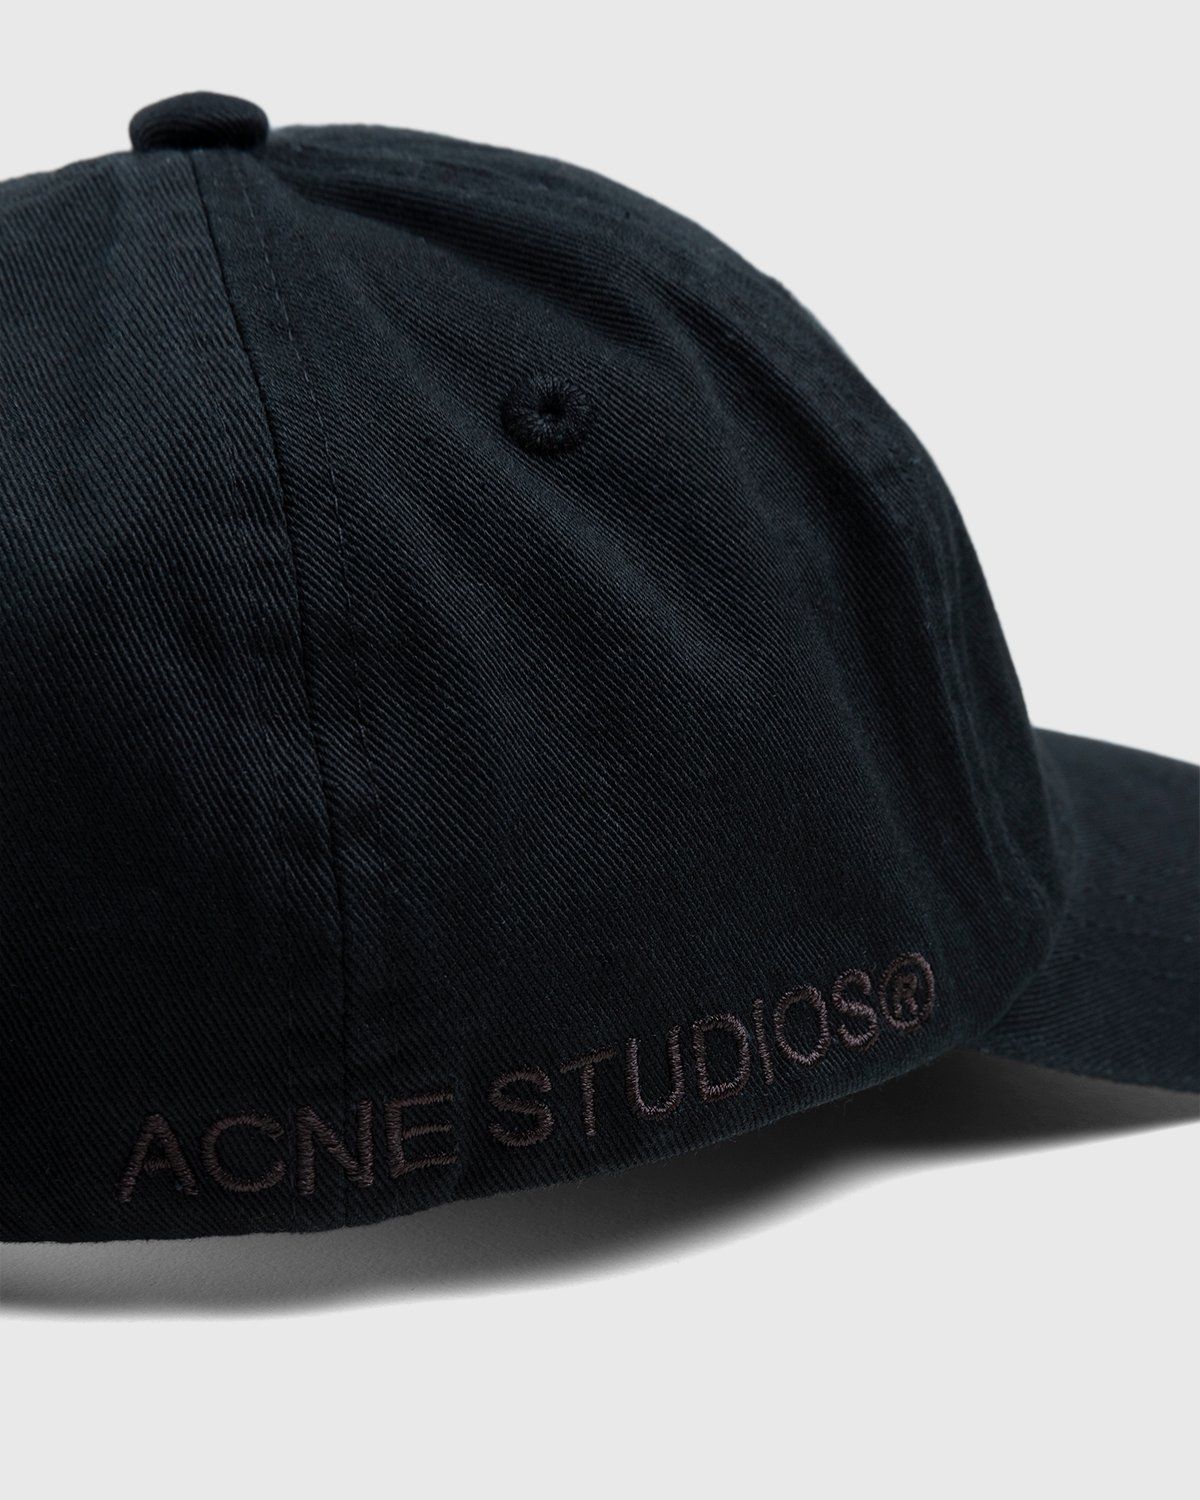 Acne Studios – Cotton Baseball Cap Black - Caps - Black - Image 5